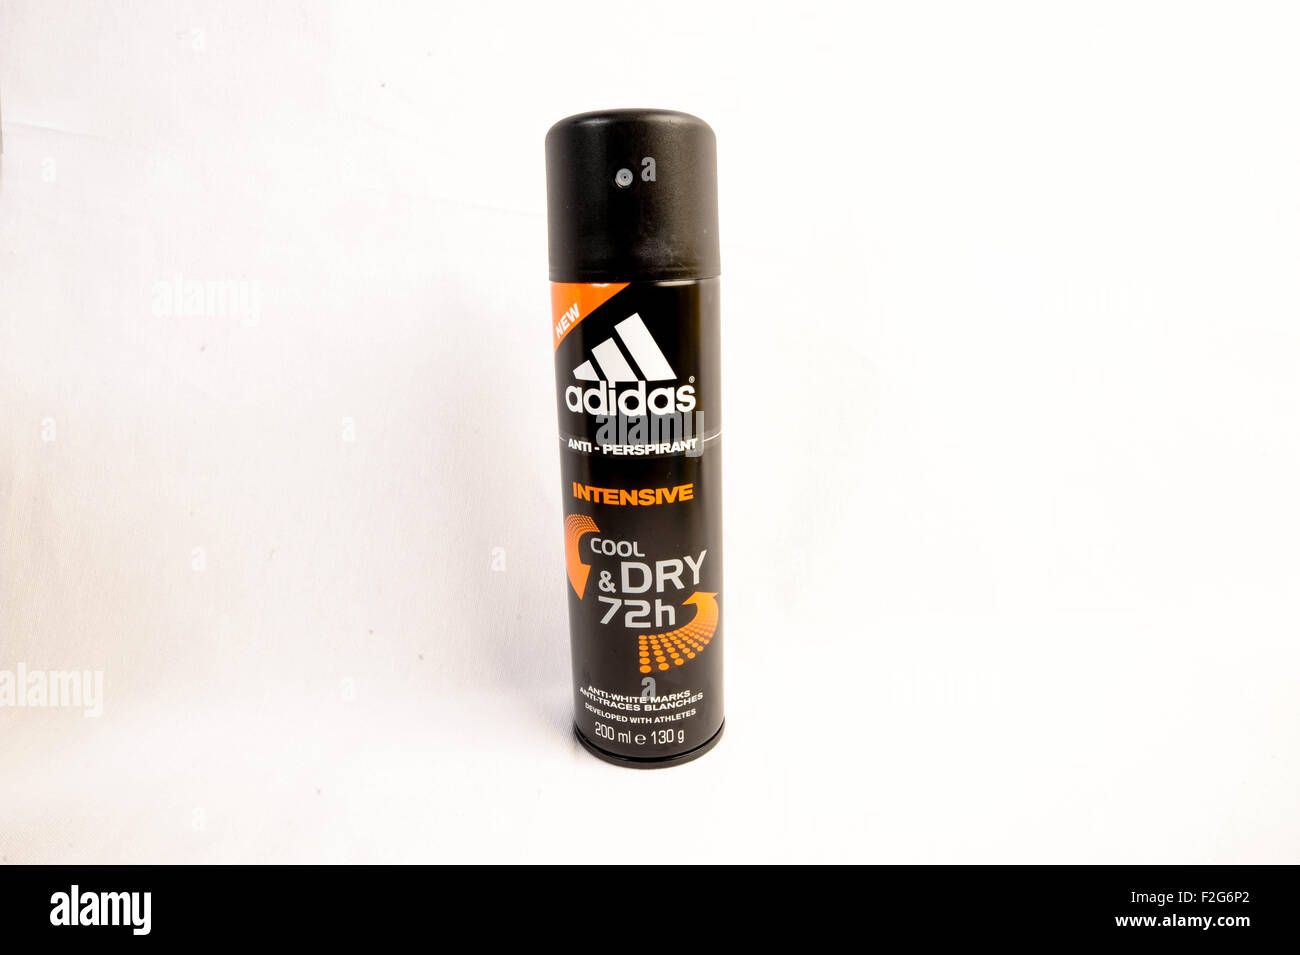 Deodorant Adidas-Desodorante Adidas Stock Photo